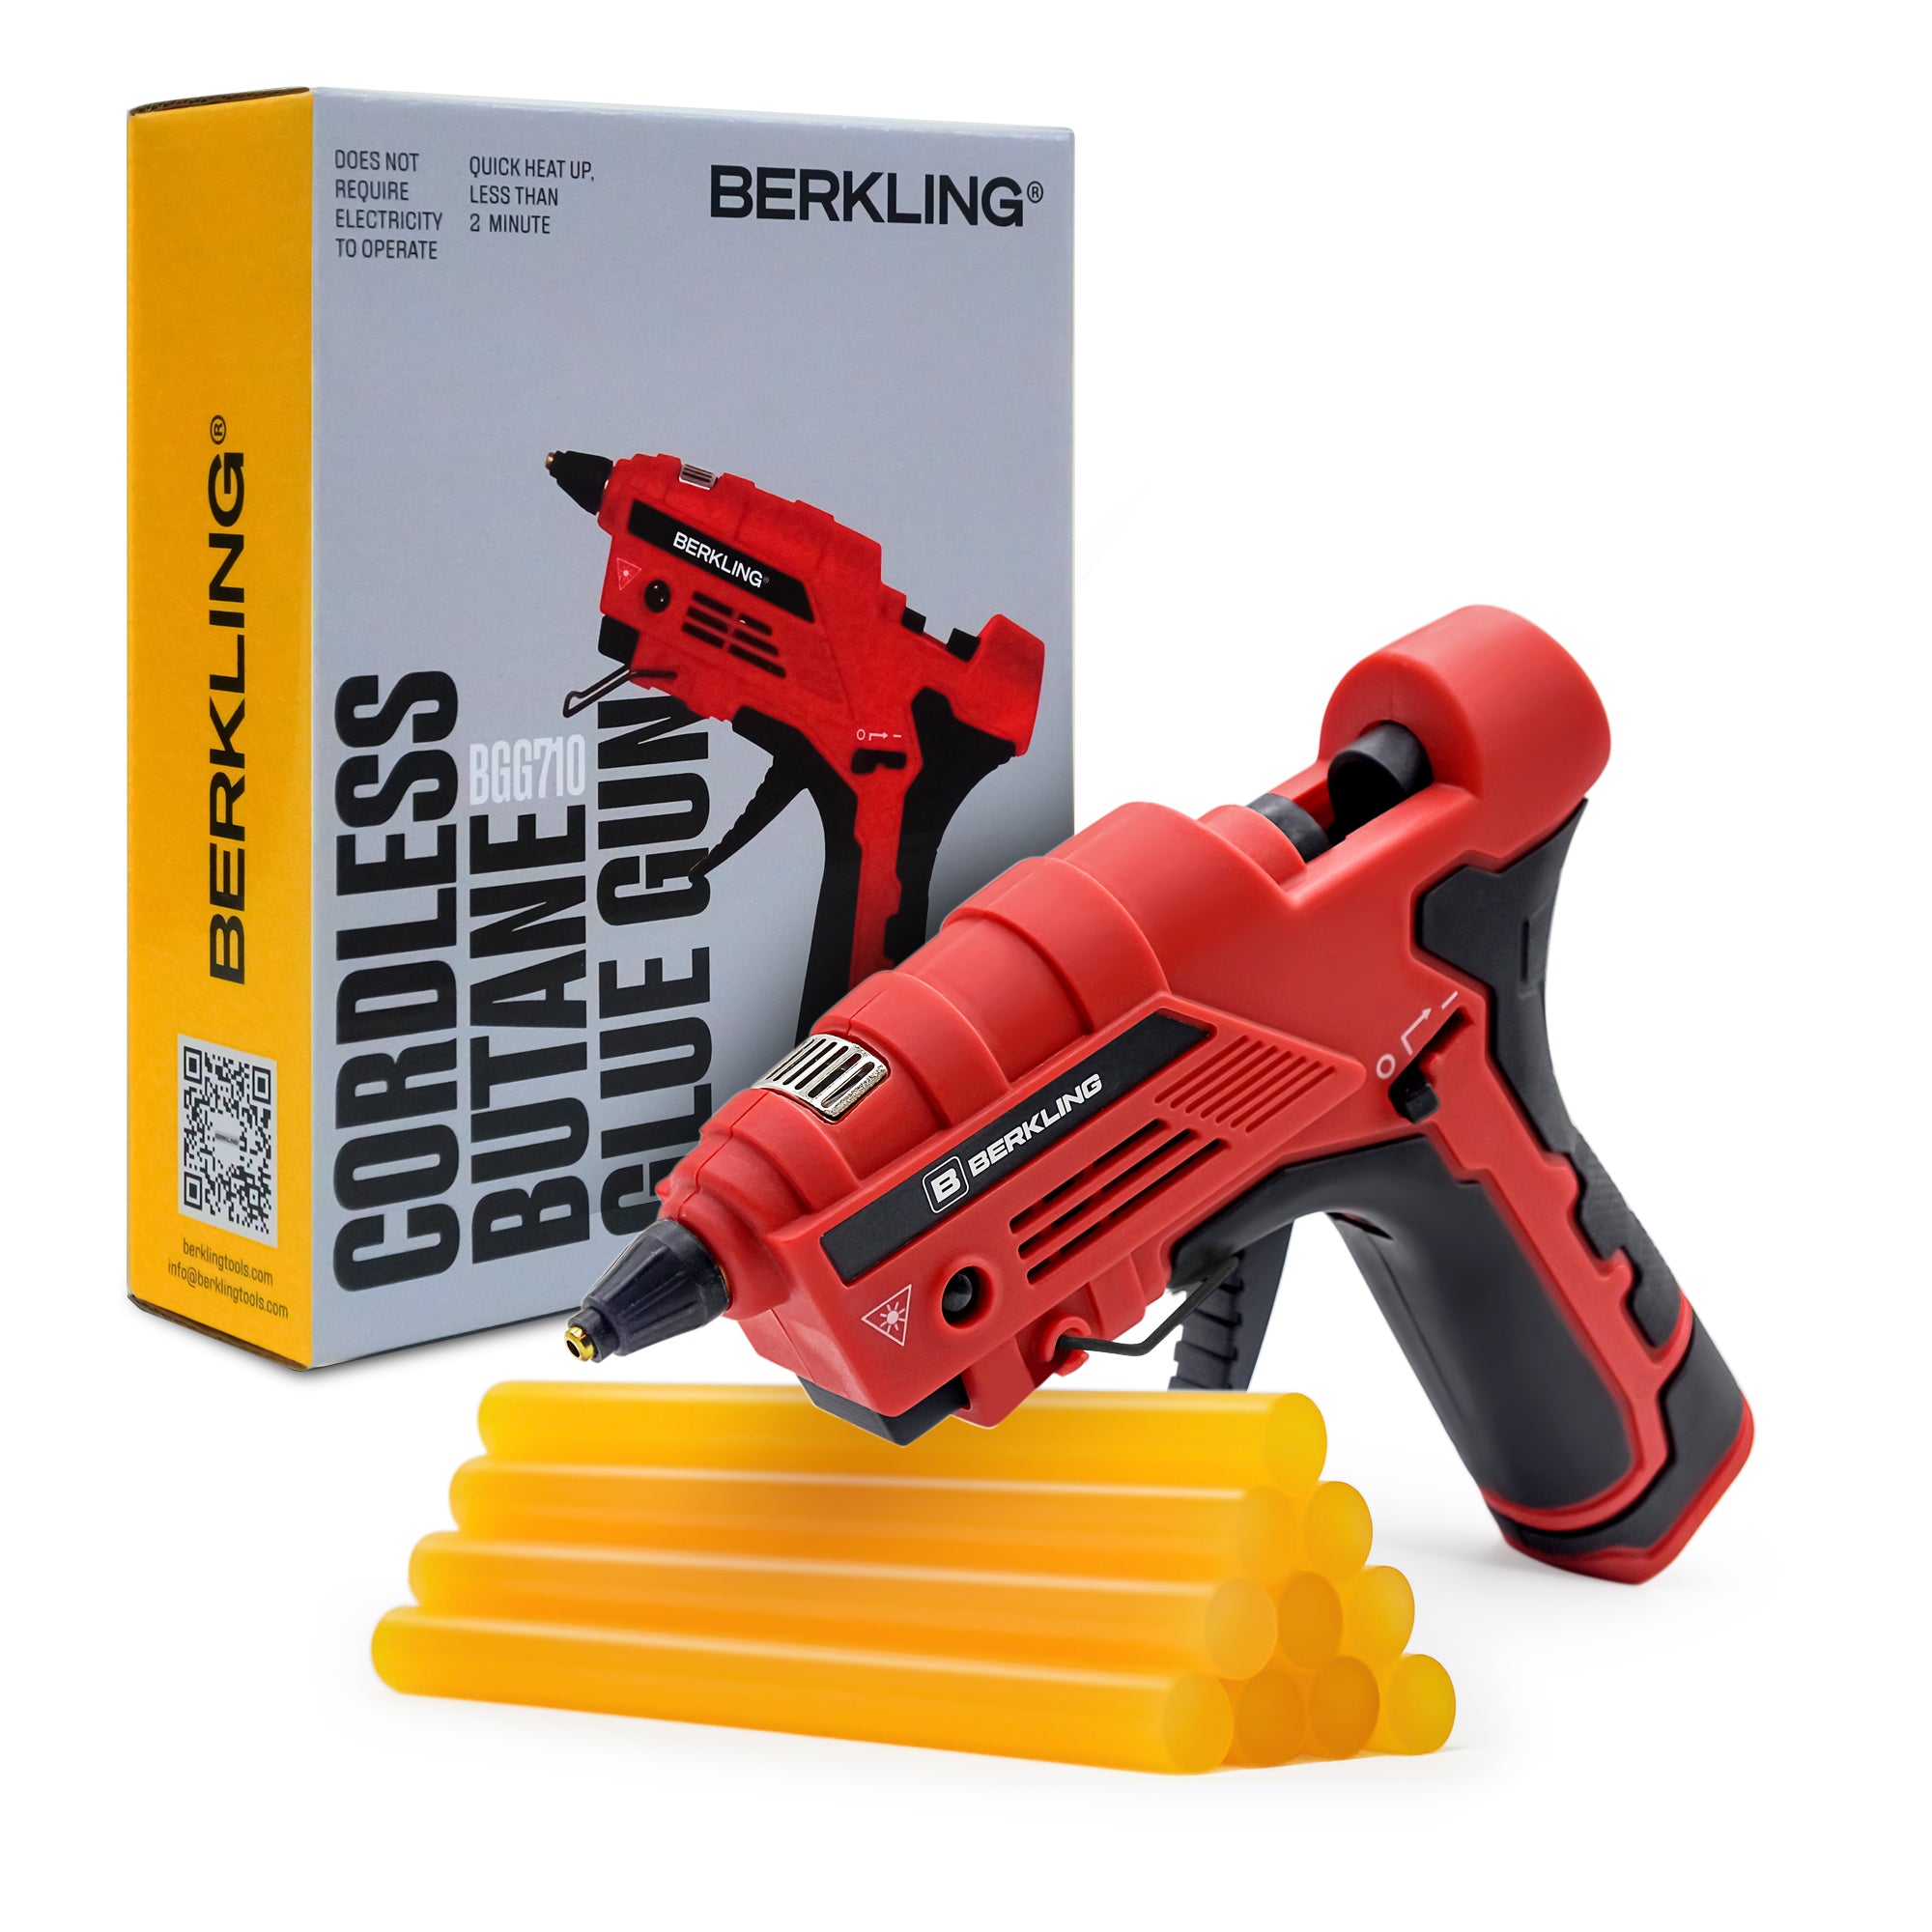 Berkling BBG-710 Cordless Butane Hot Glue Gun, Quick Heat Up, Smart Temp Control, 7ml Fuel Tank, 1.5hr Operation, 5 Sec Quick Recharge, 10 Glue Sticks